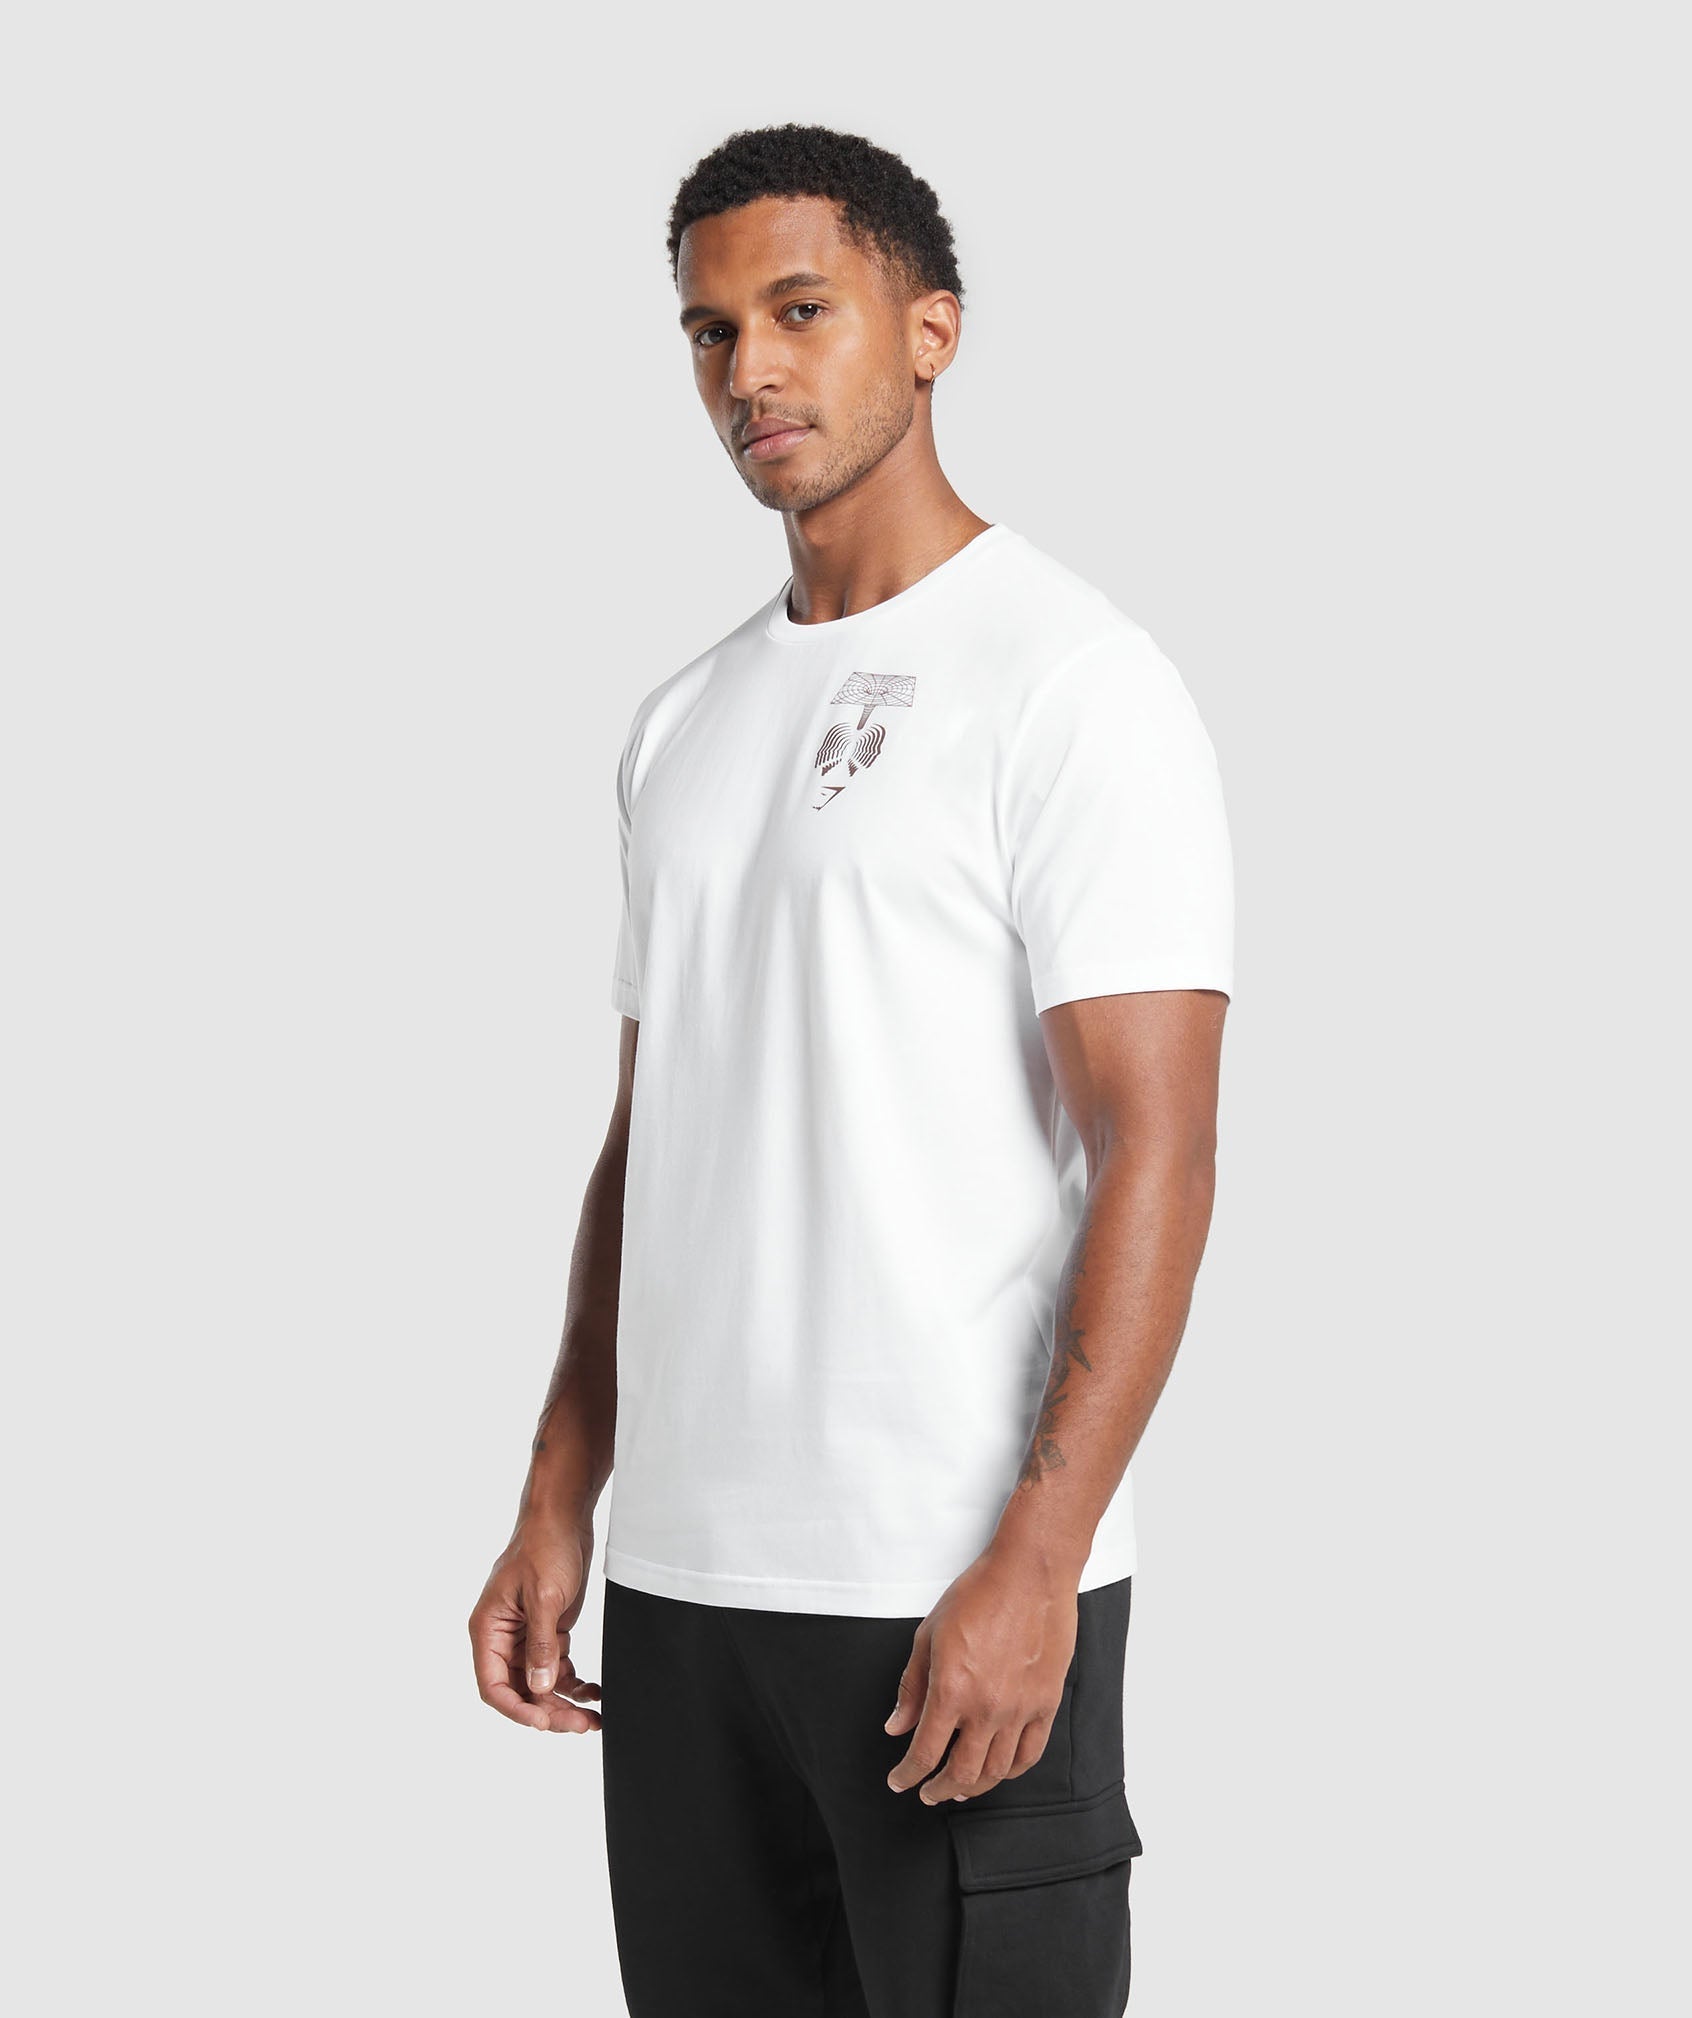 Hybrid Wellness T-Shirt in White - view 3